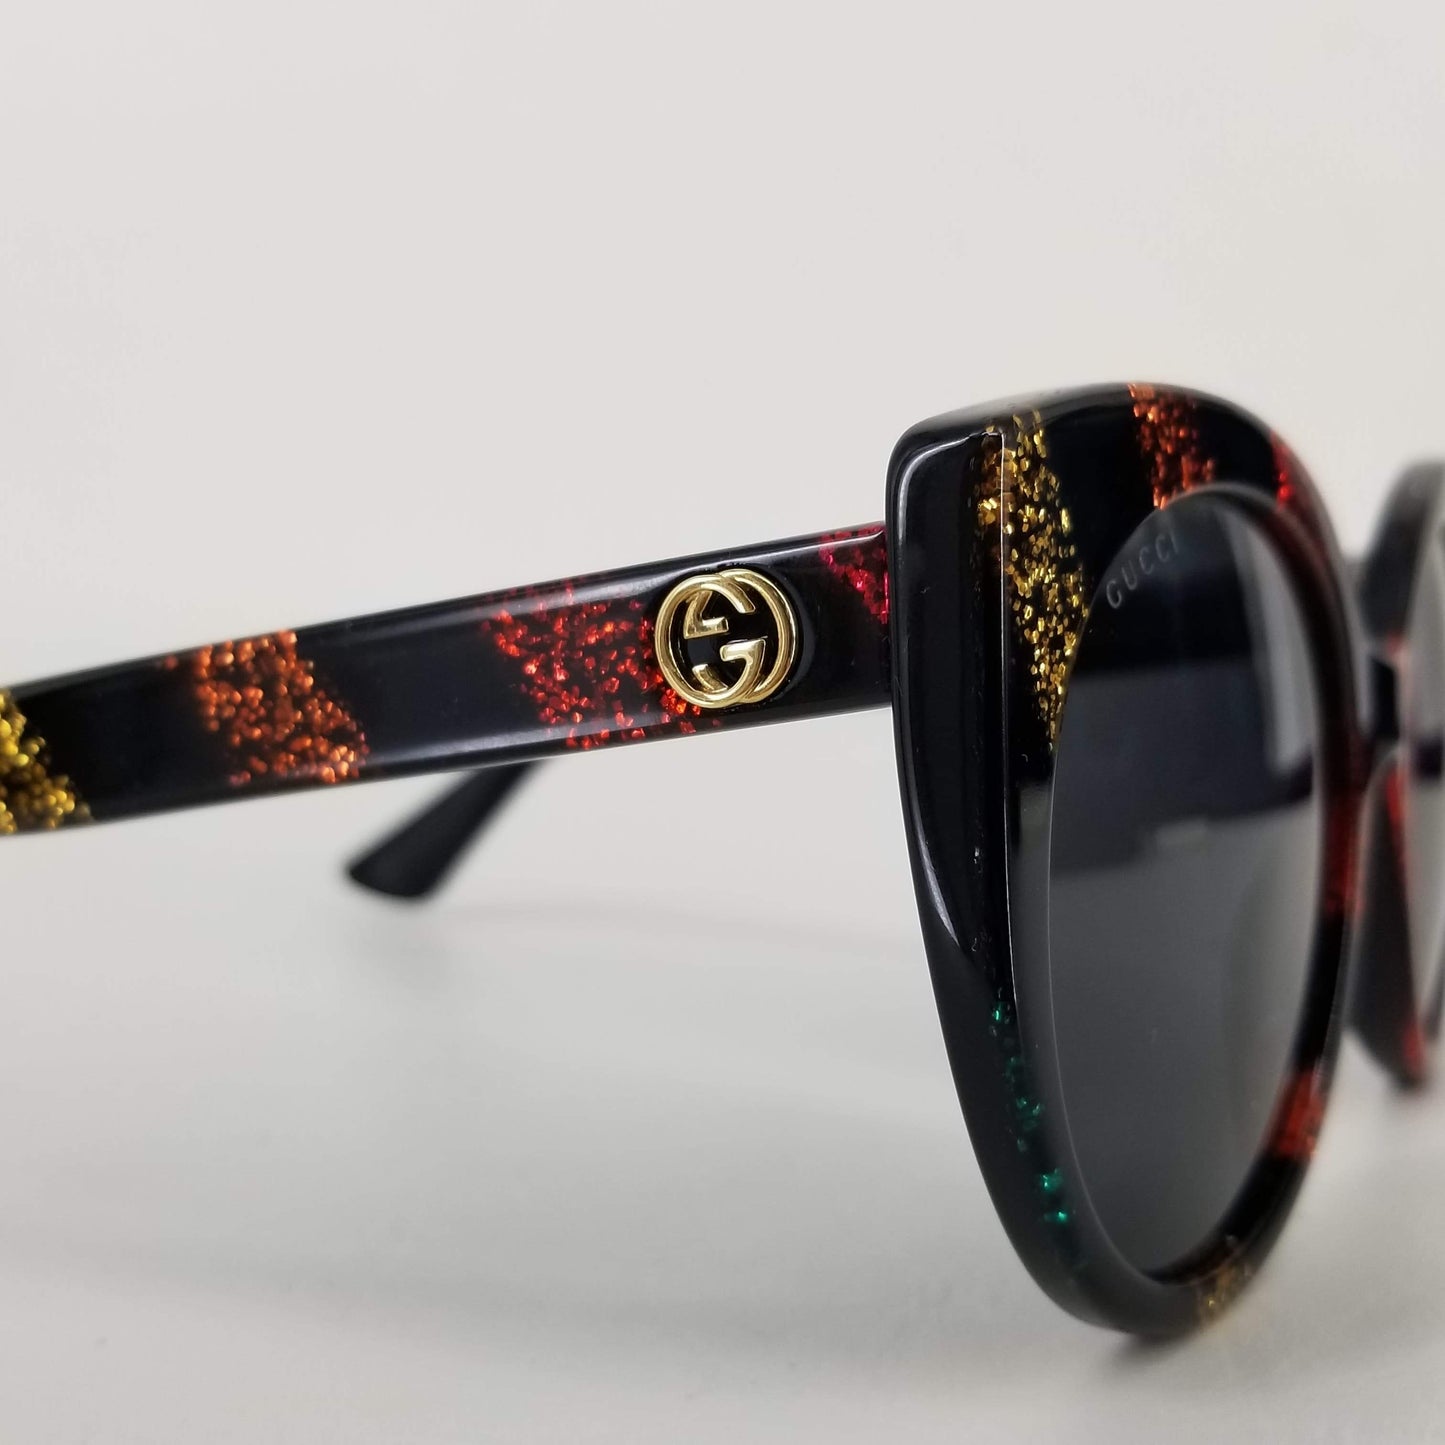 Authentic Gucci Black Psychedelic Sunglasses GG0325S